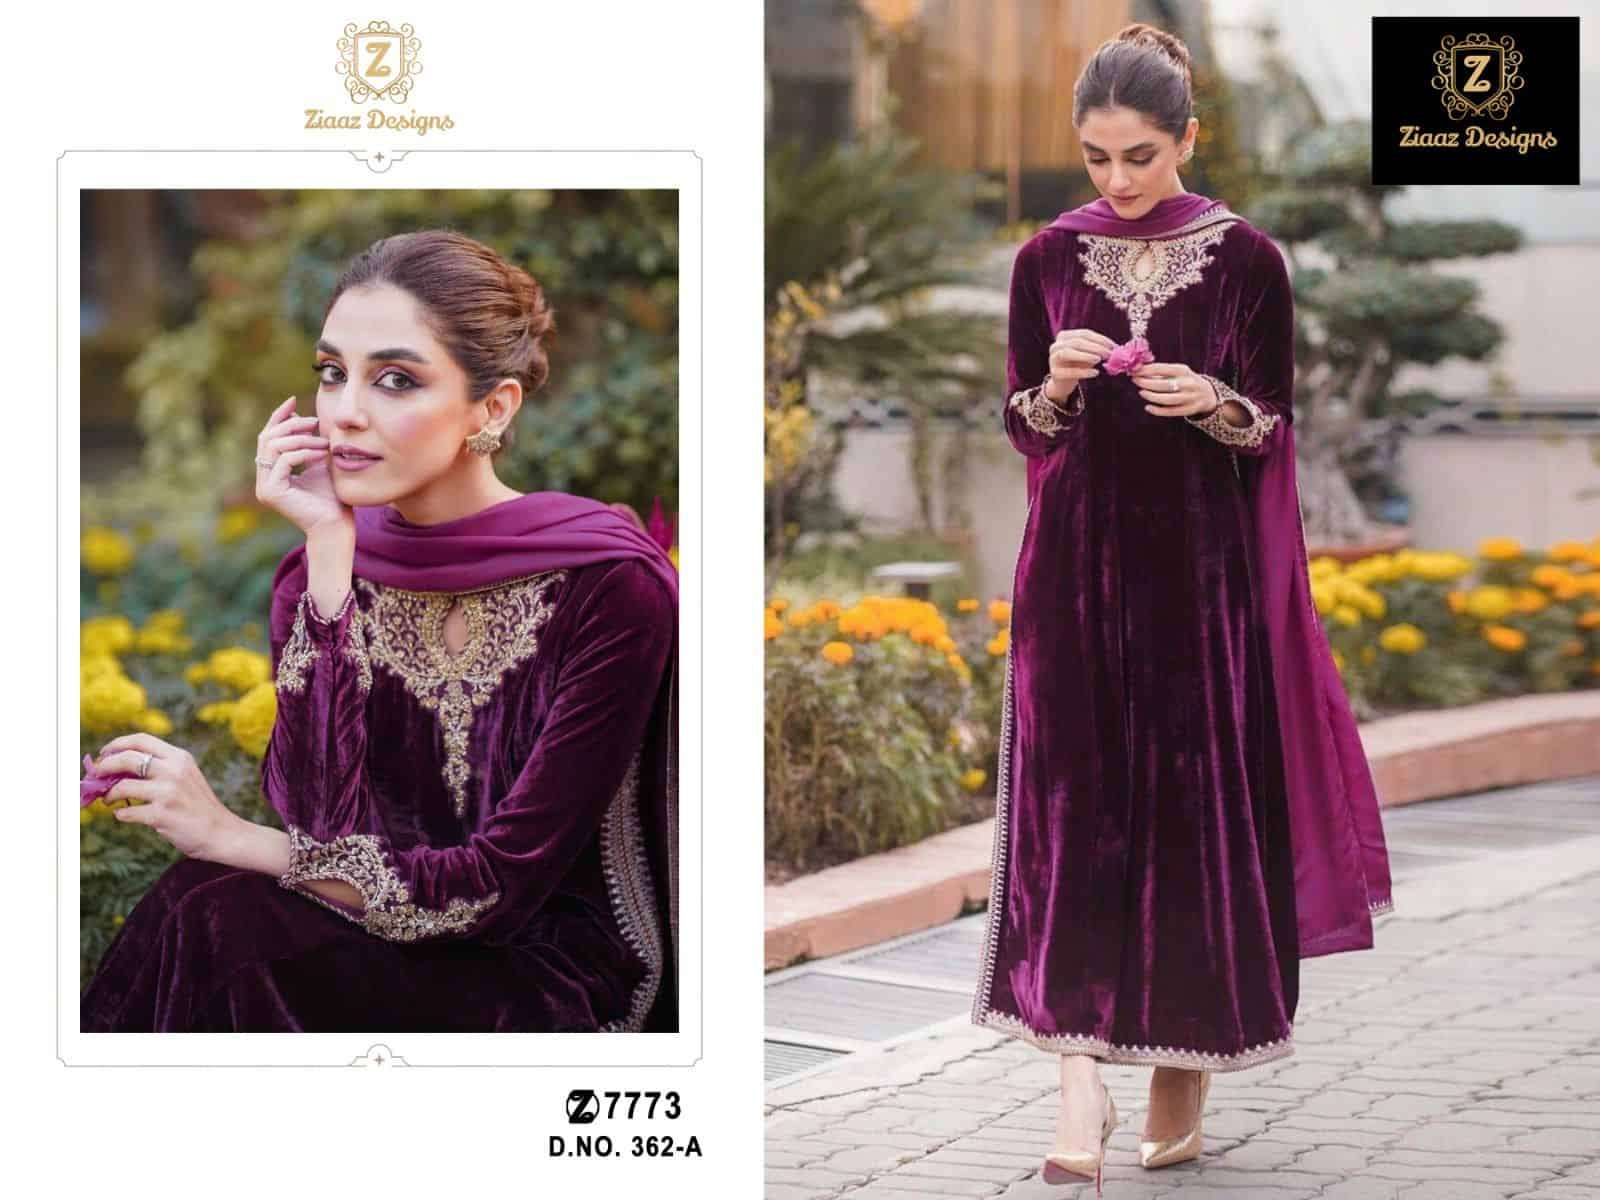 Velvet Party & Wedding Dresses in Pakistan | PakStyle Fashion Blog